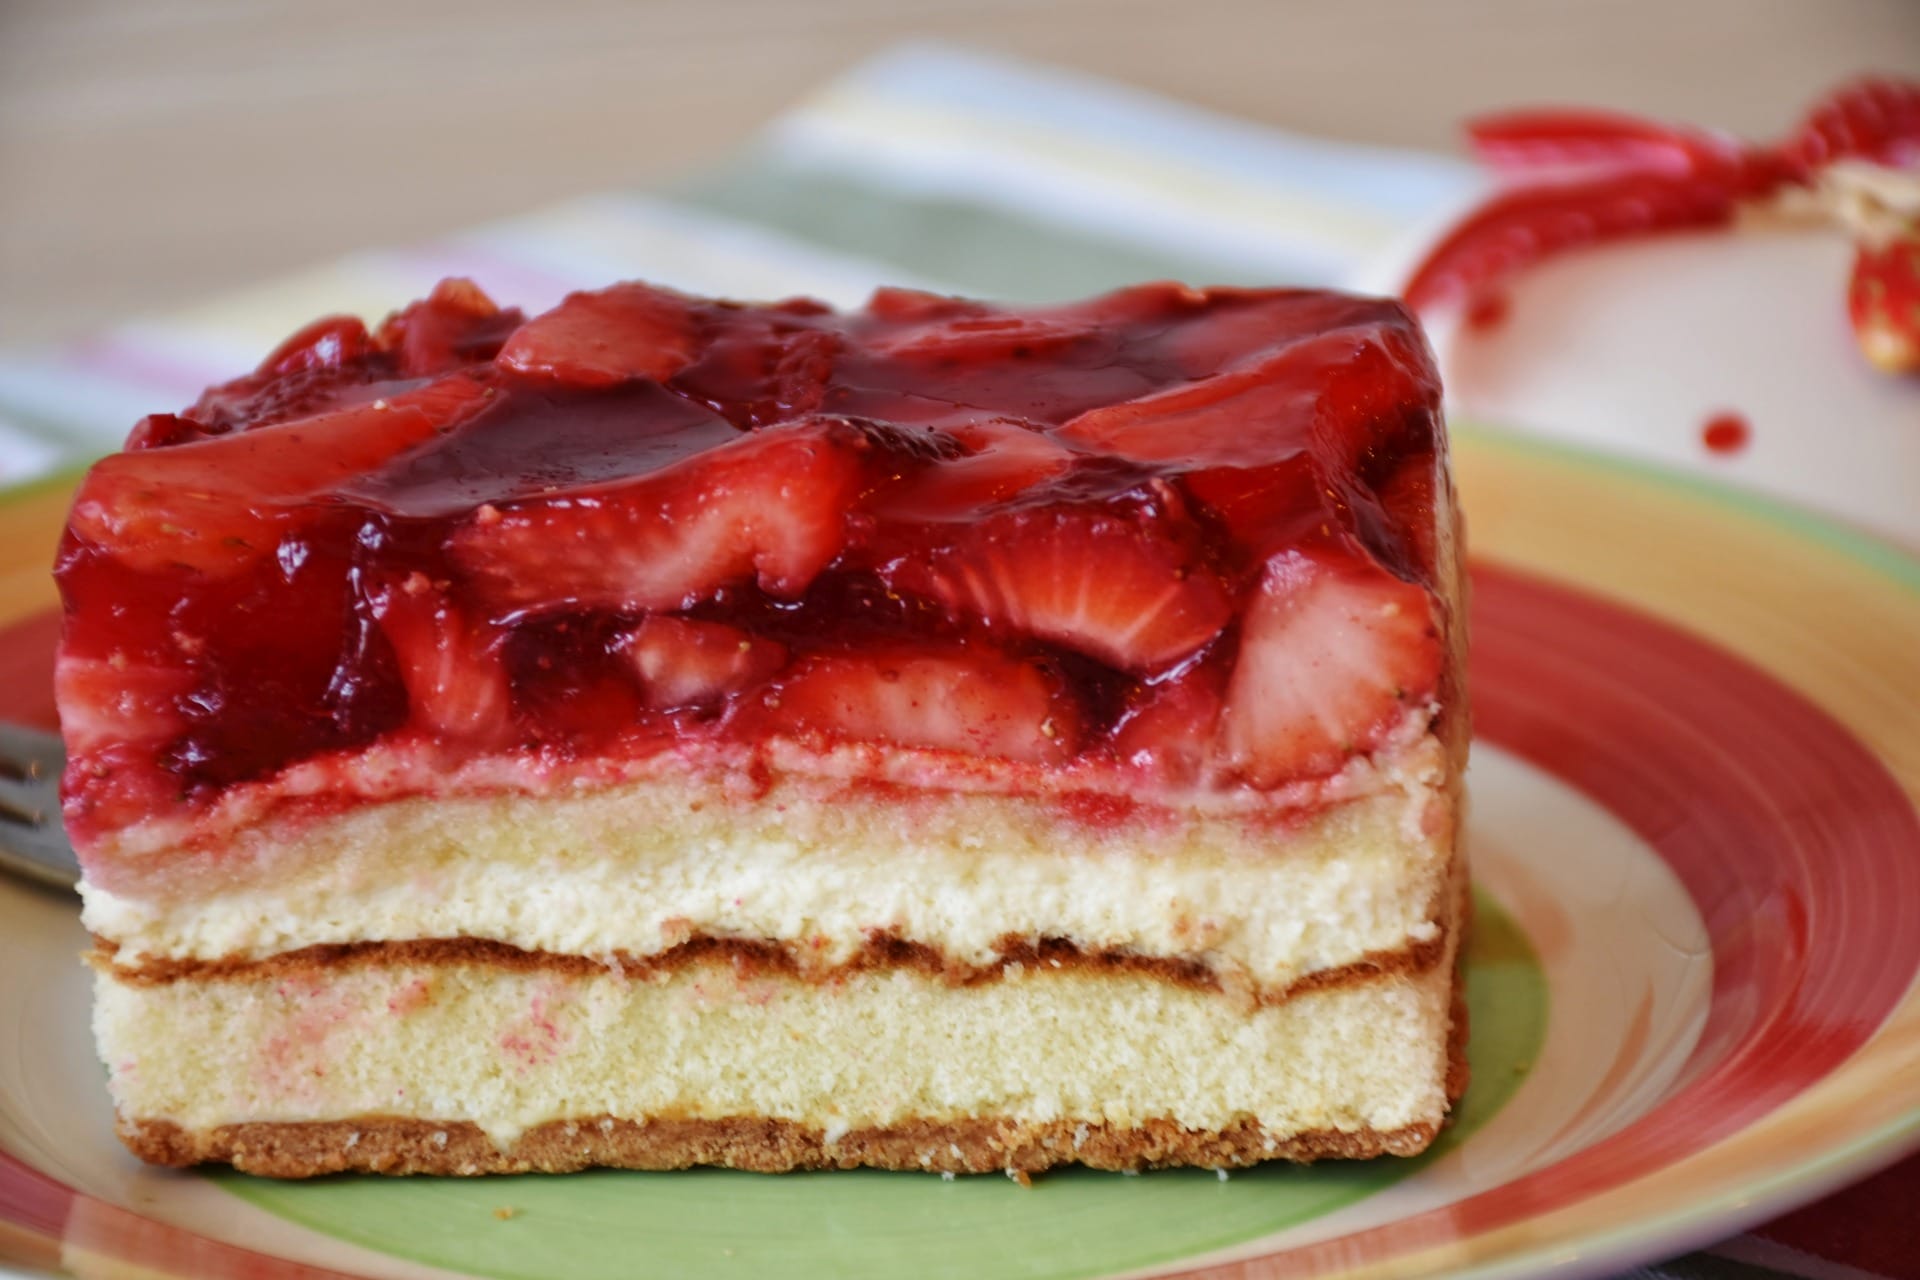 Enjoy Some Strawberry Vanilla Cheesecake